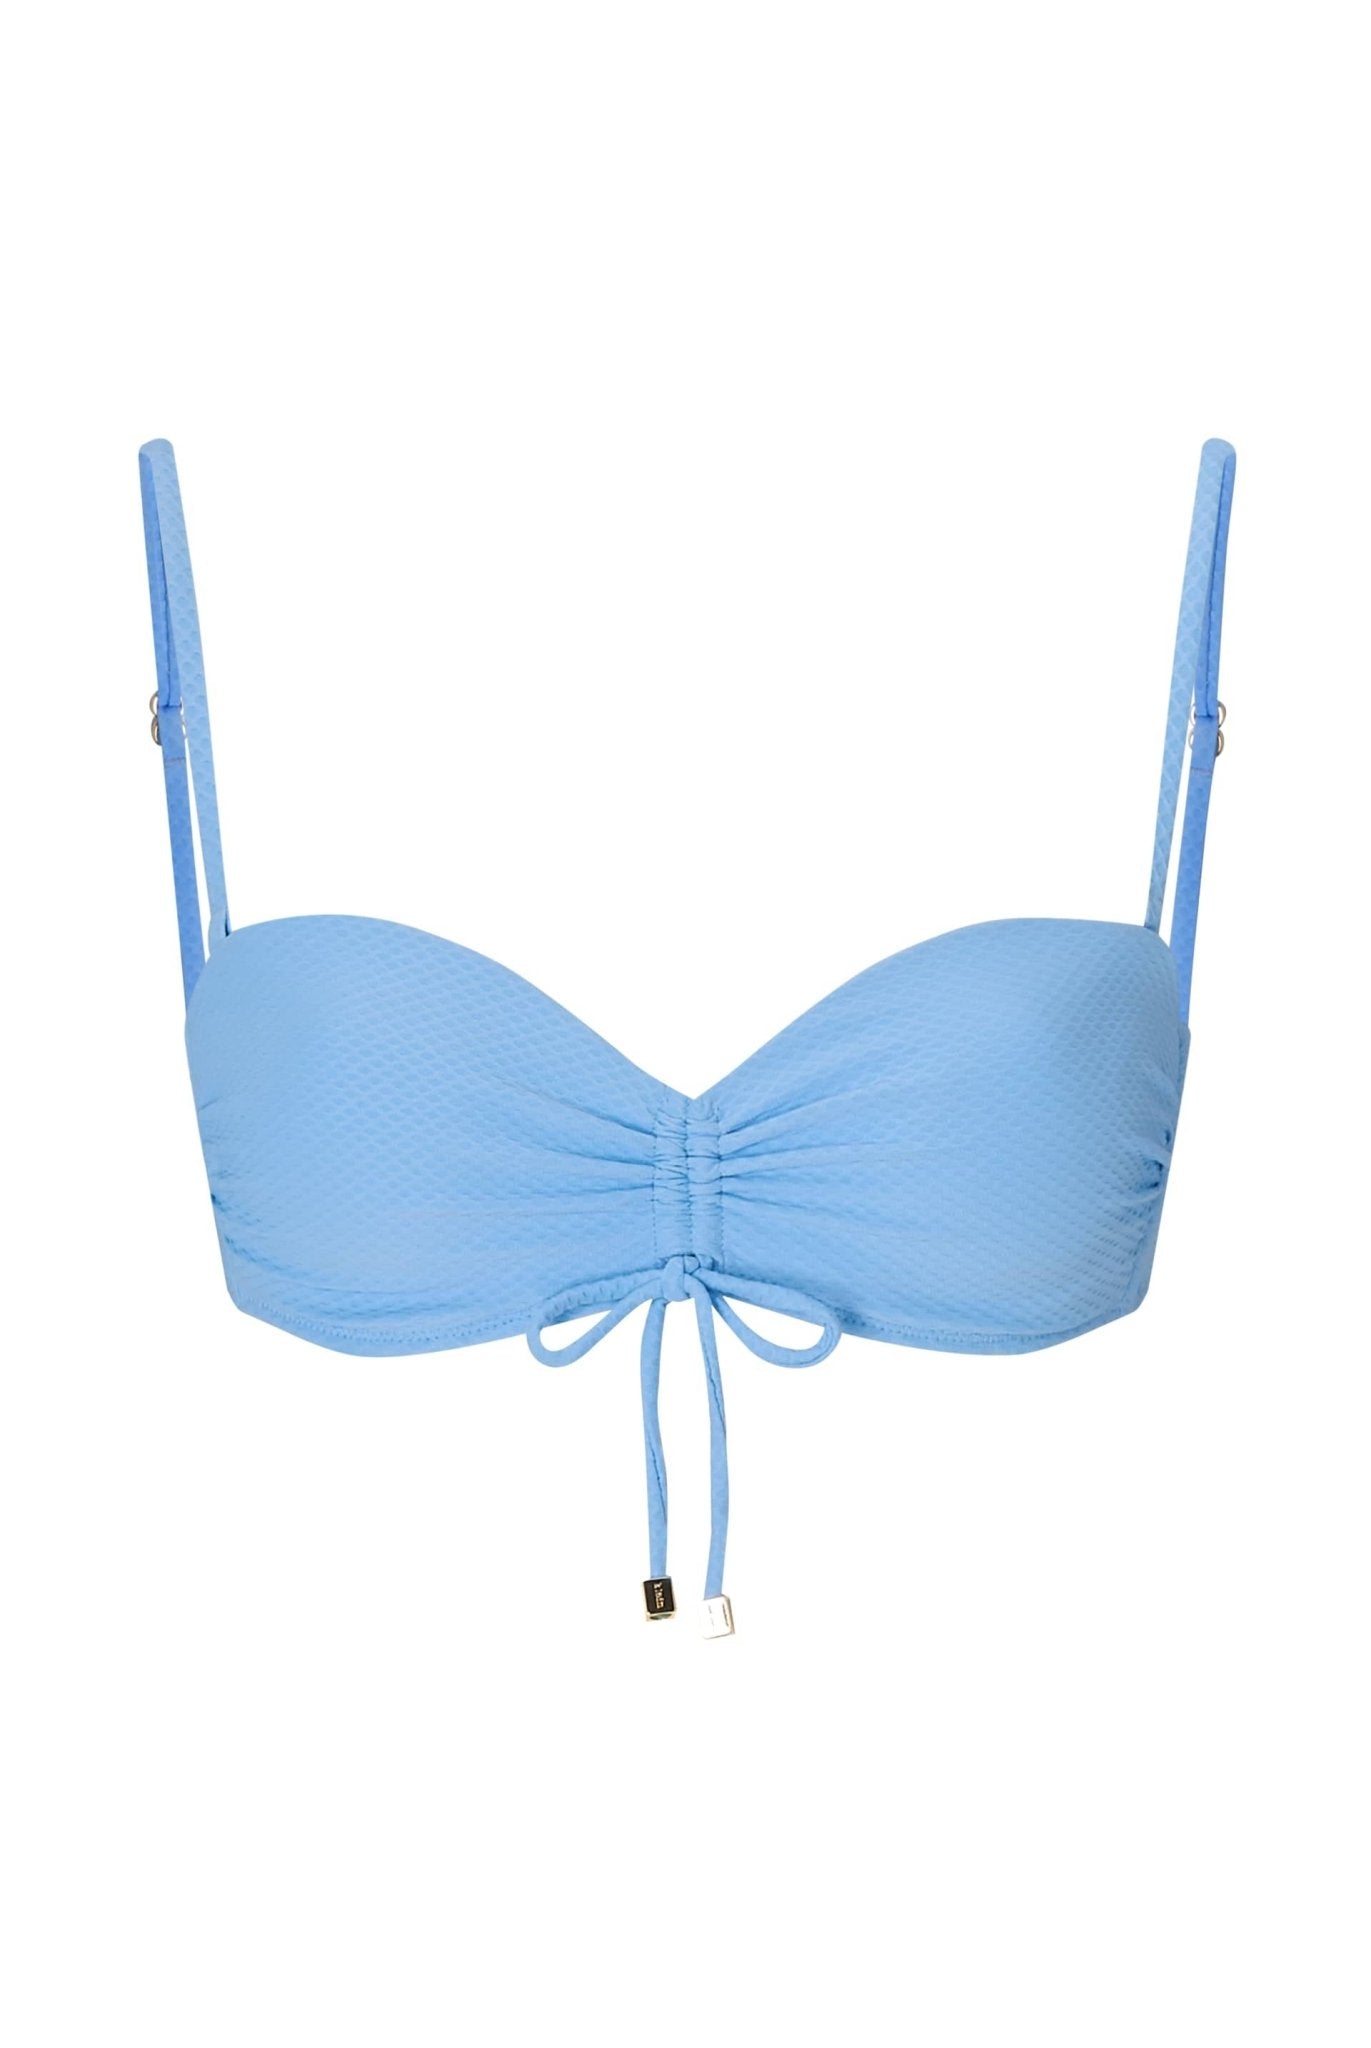 Core Bandeau Bikini Top in Ocean Tide - Heidi Klein - UK Store